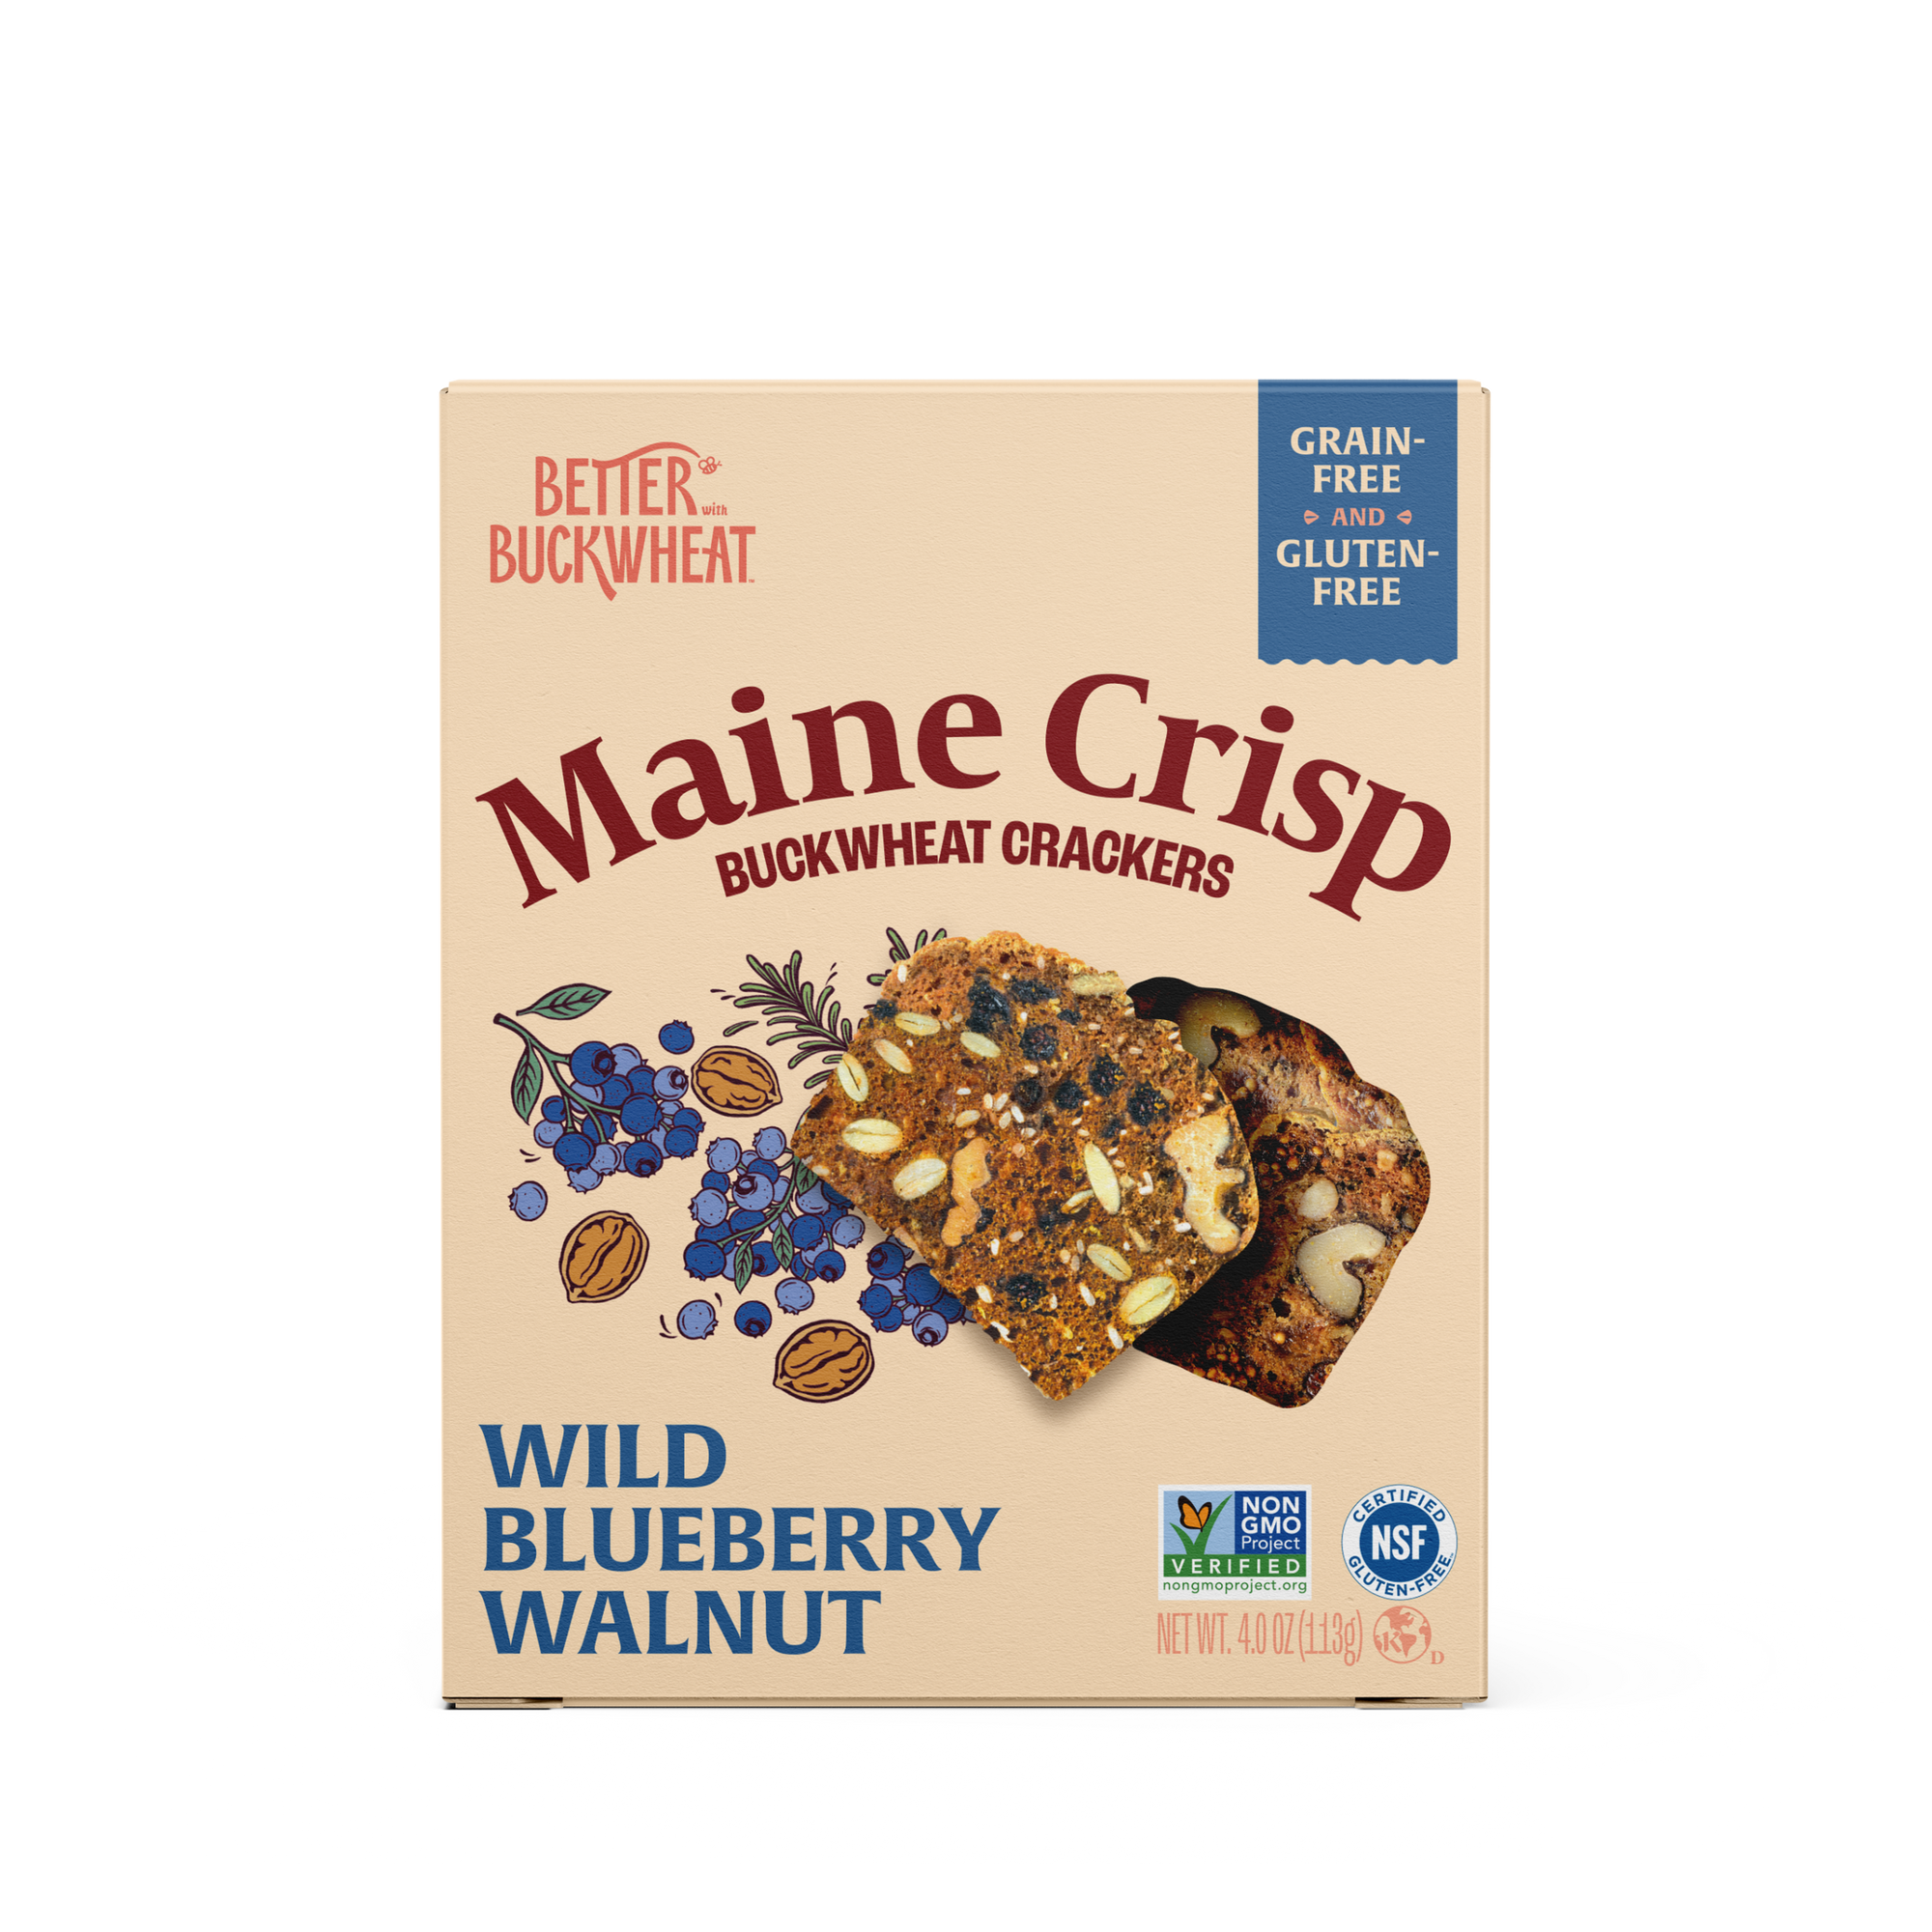 Wild Blueberry Walnut Crisps